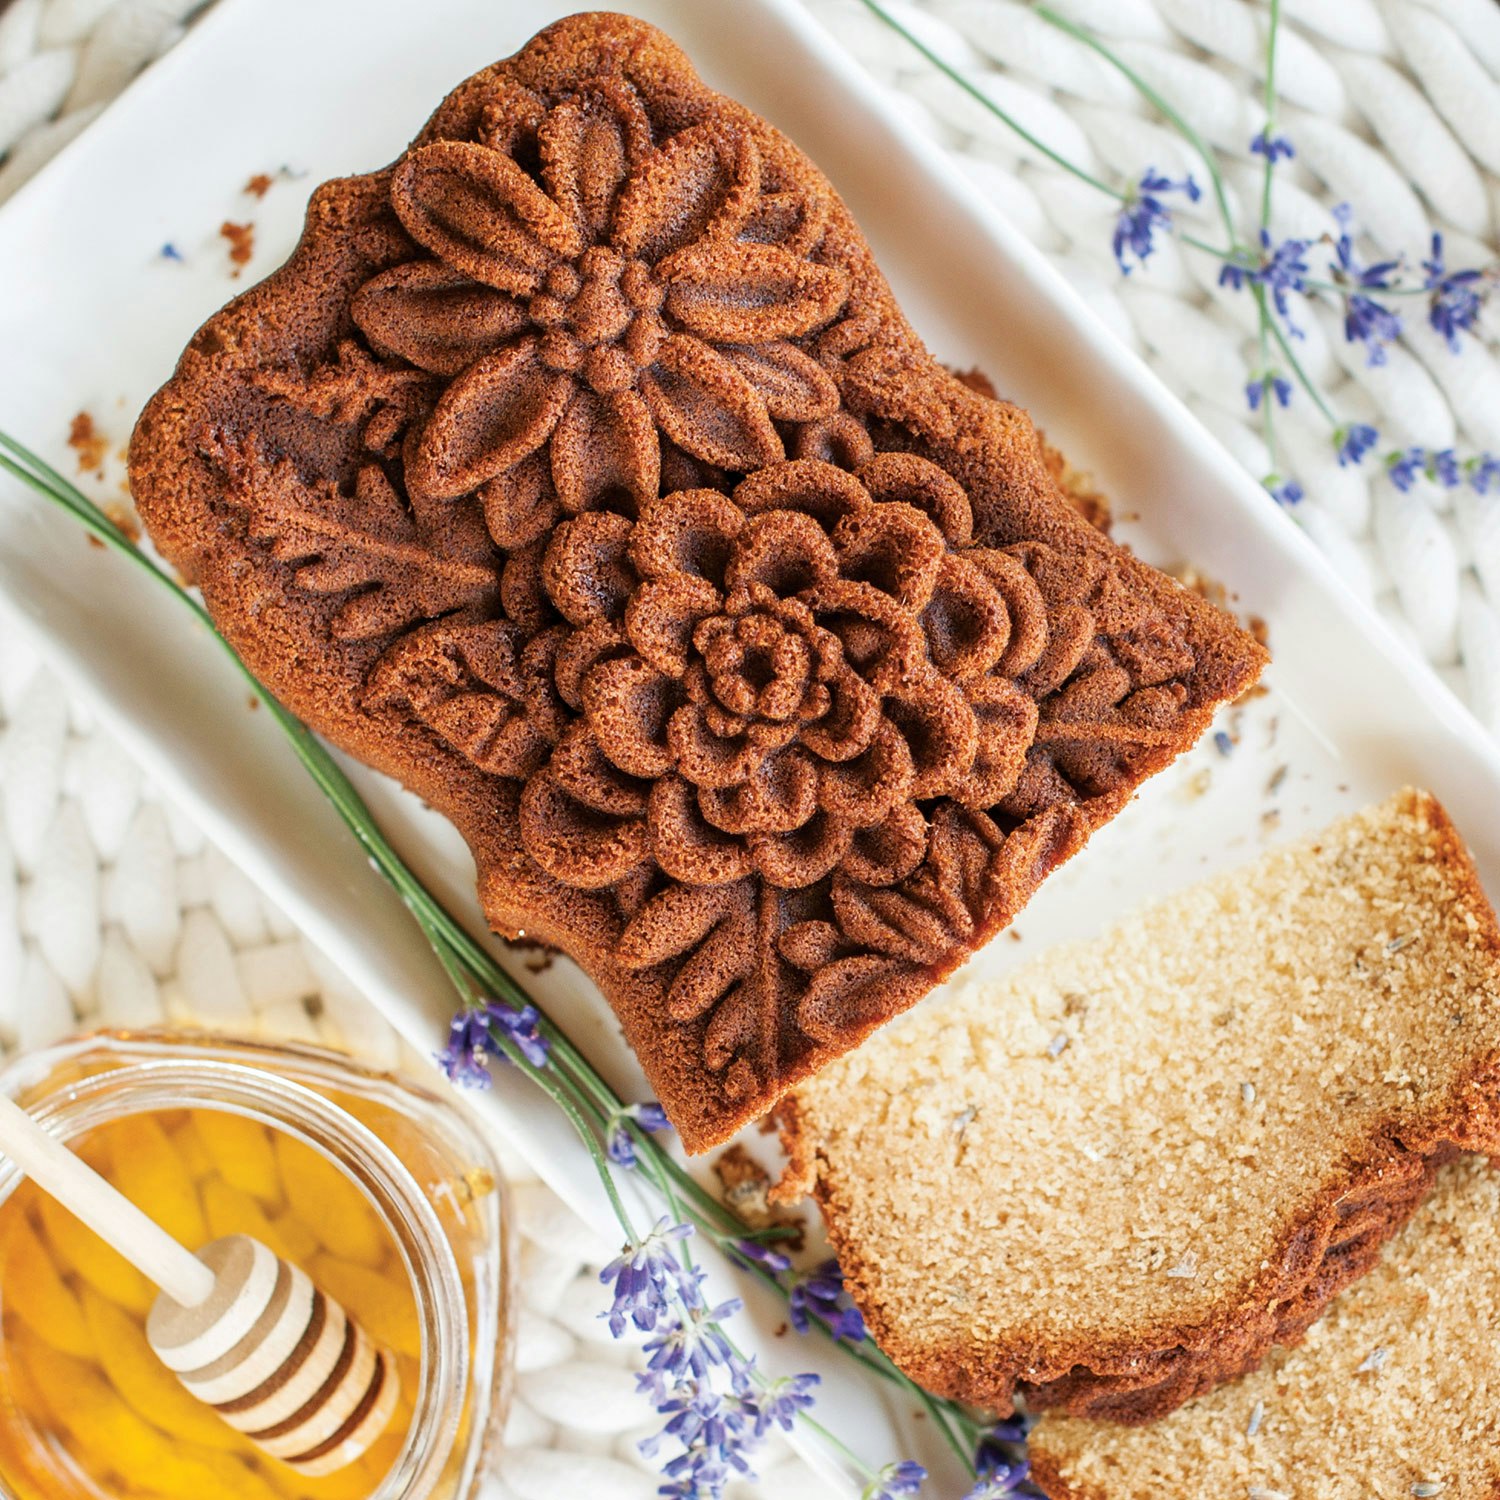 Nordic Ware Wildflower Loaf Pan - Nordic Ware @ RoyalDesign